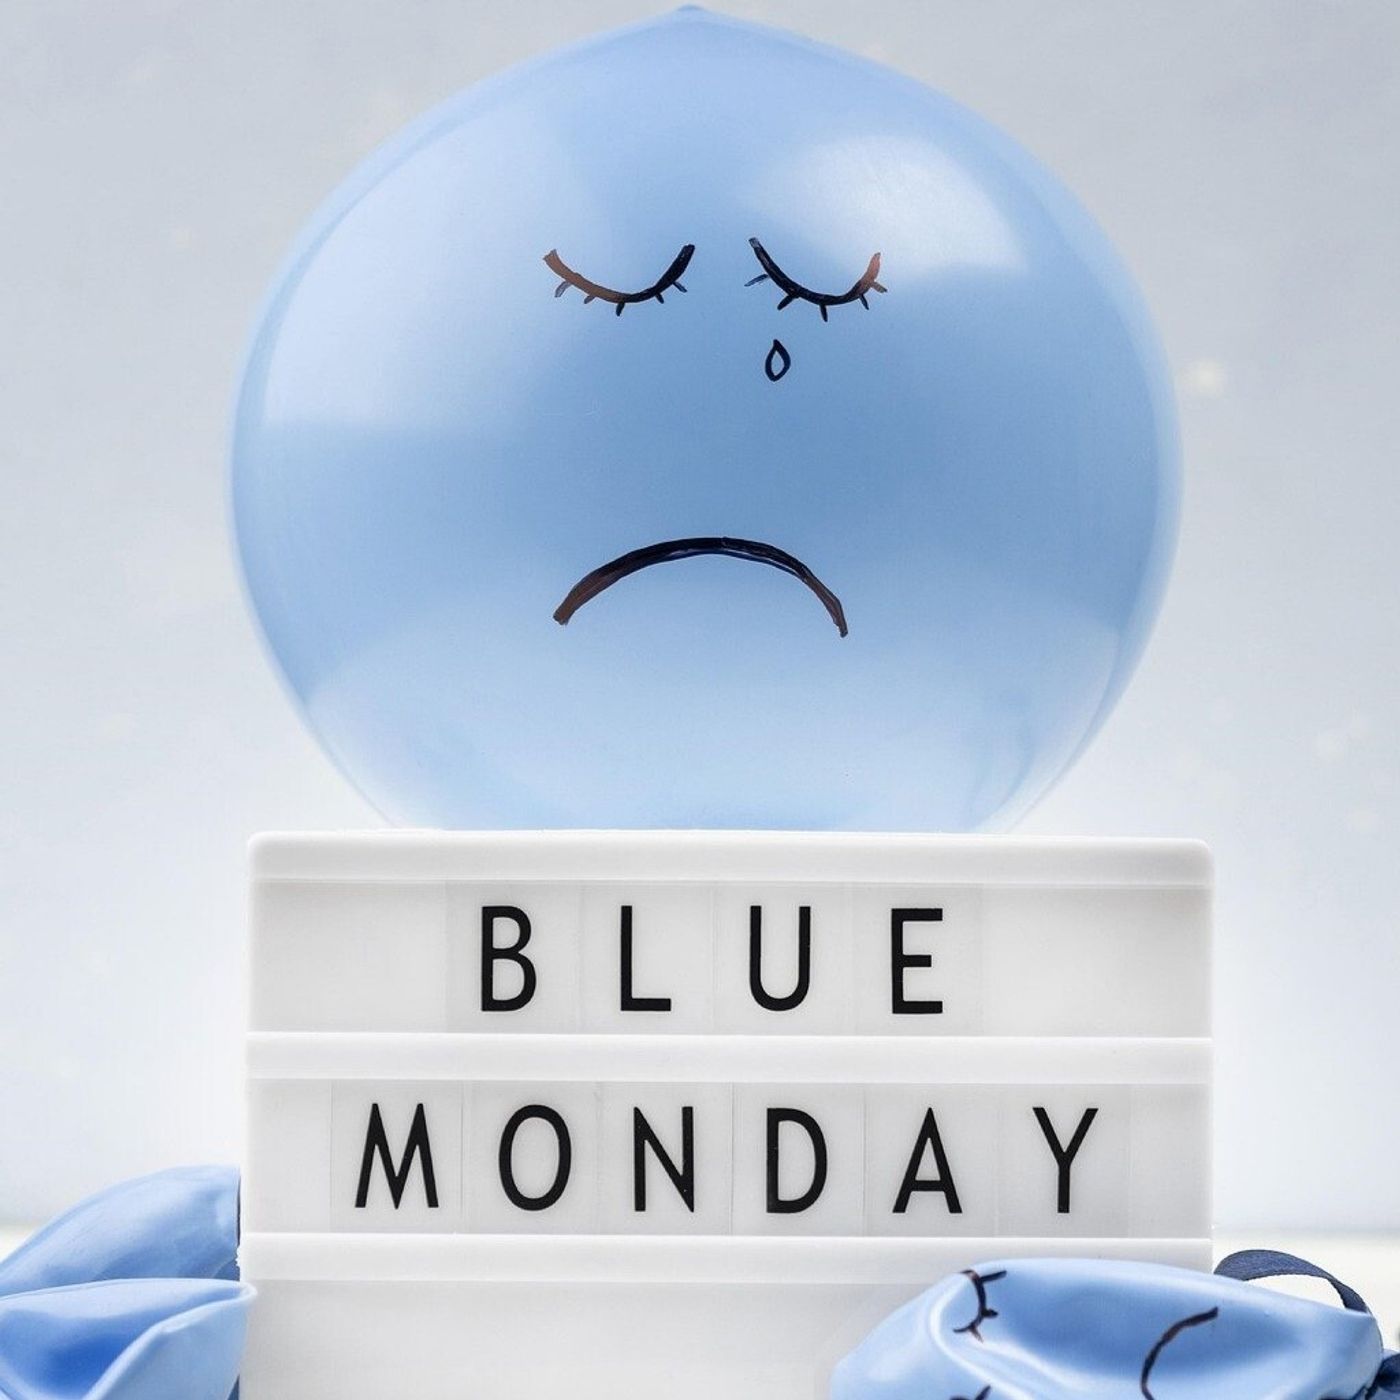 Ep 314: ”Blue Monday” and job satisfaction with MHFA England